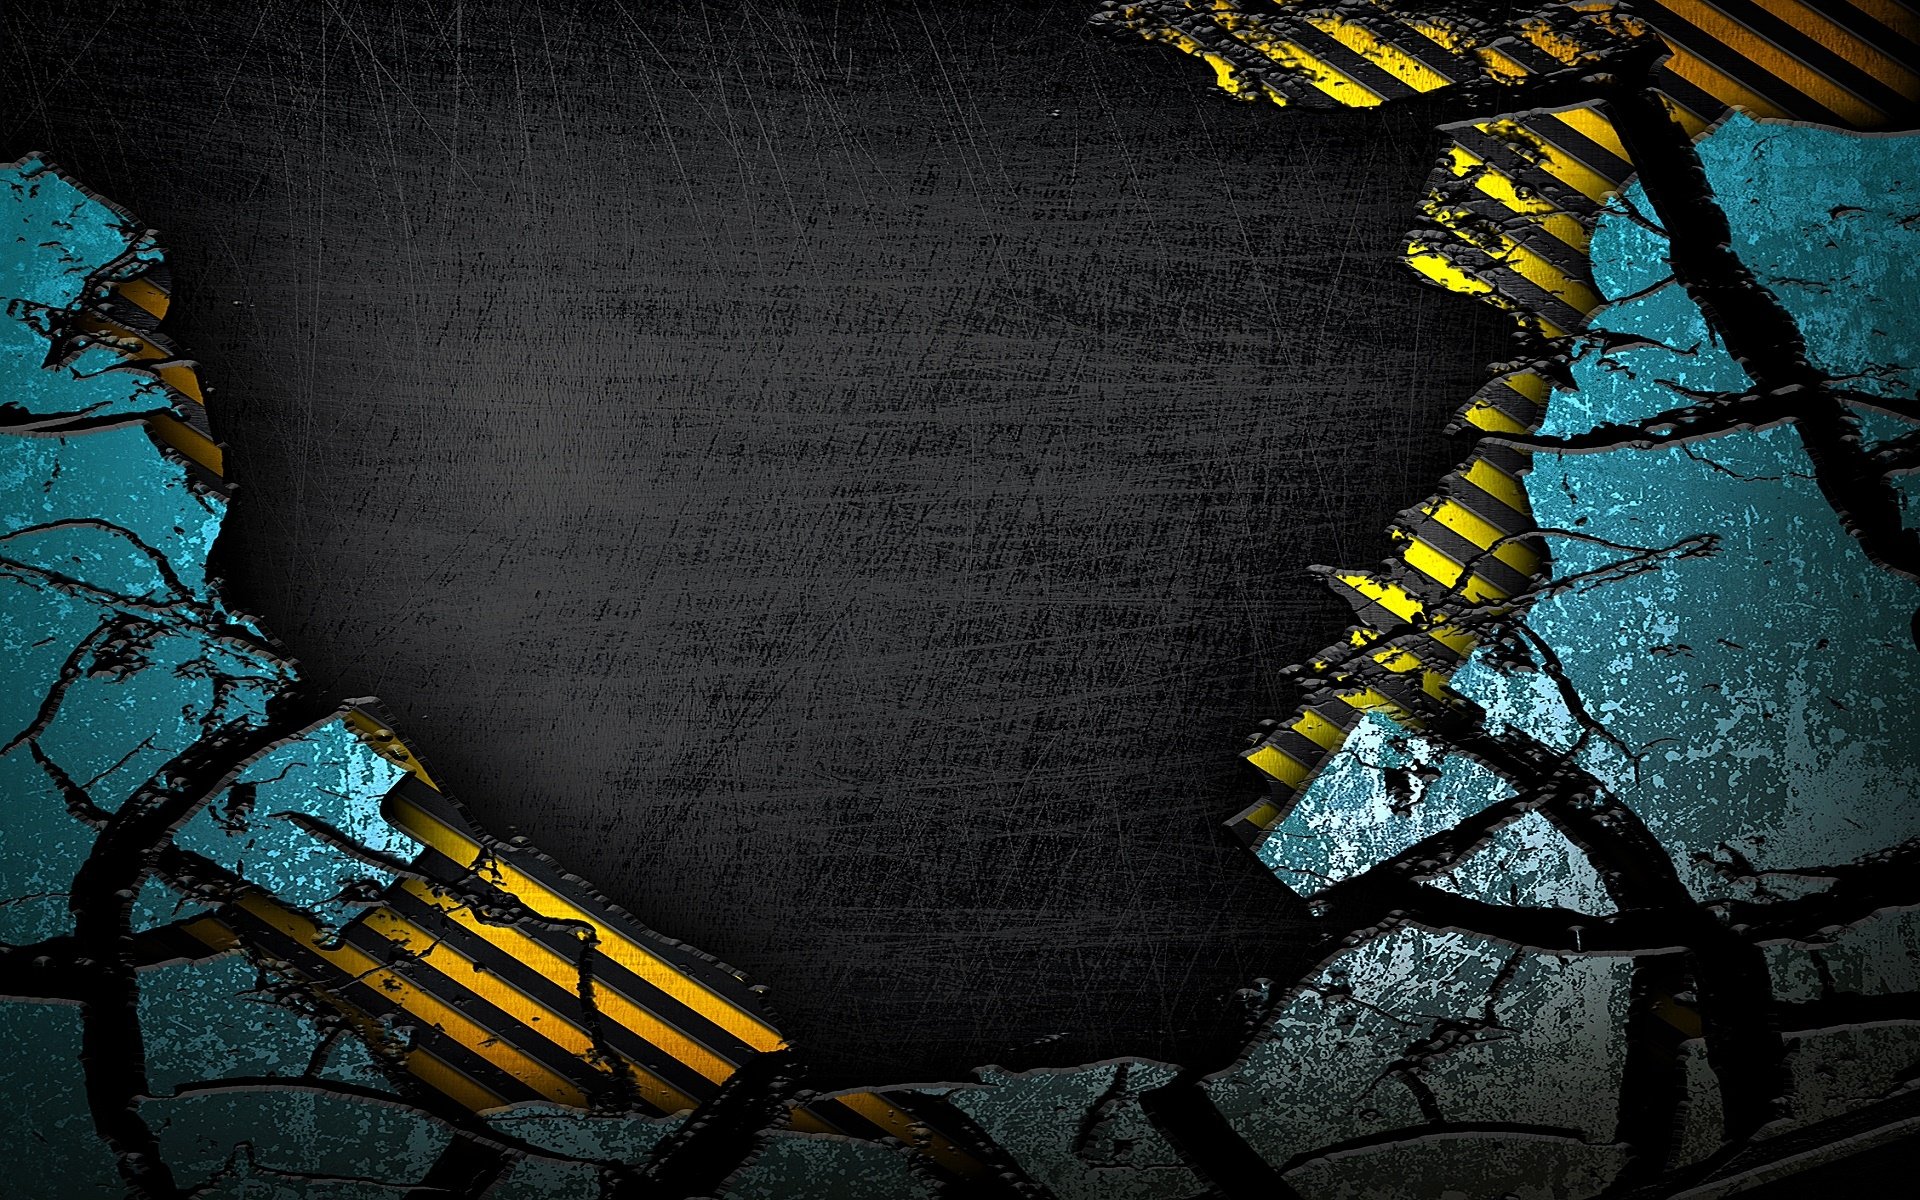  Grunge  HD Wallpaper  Background Image 1920x1200 ID 